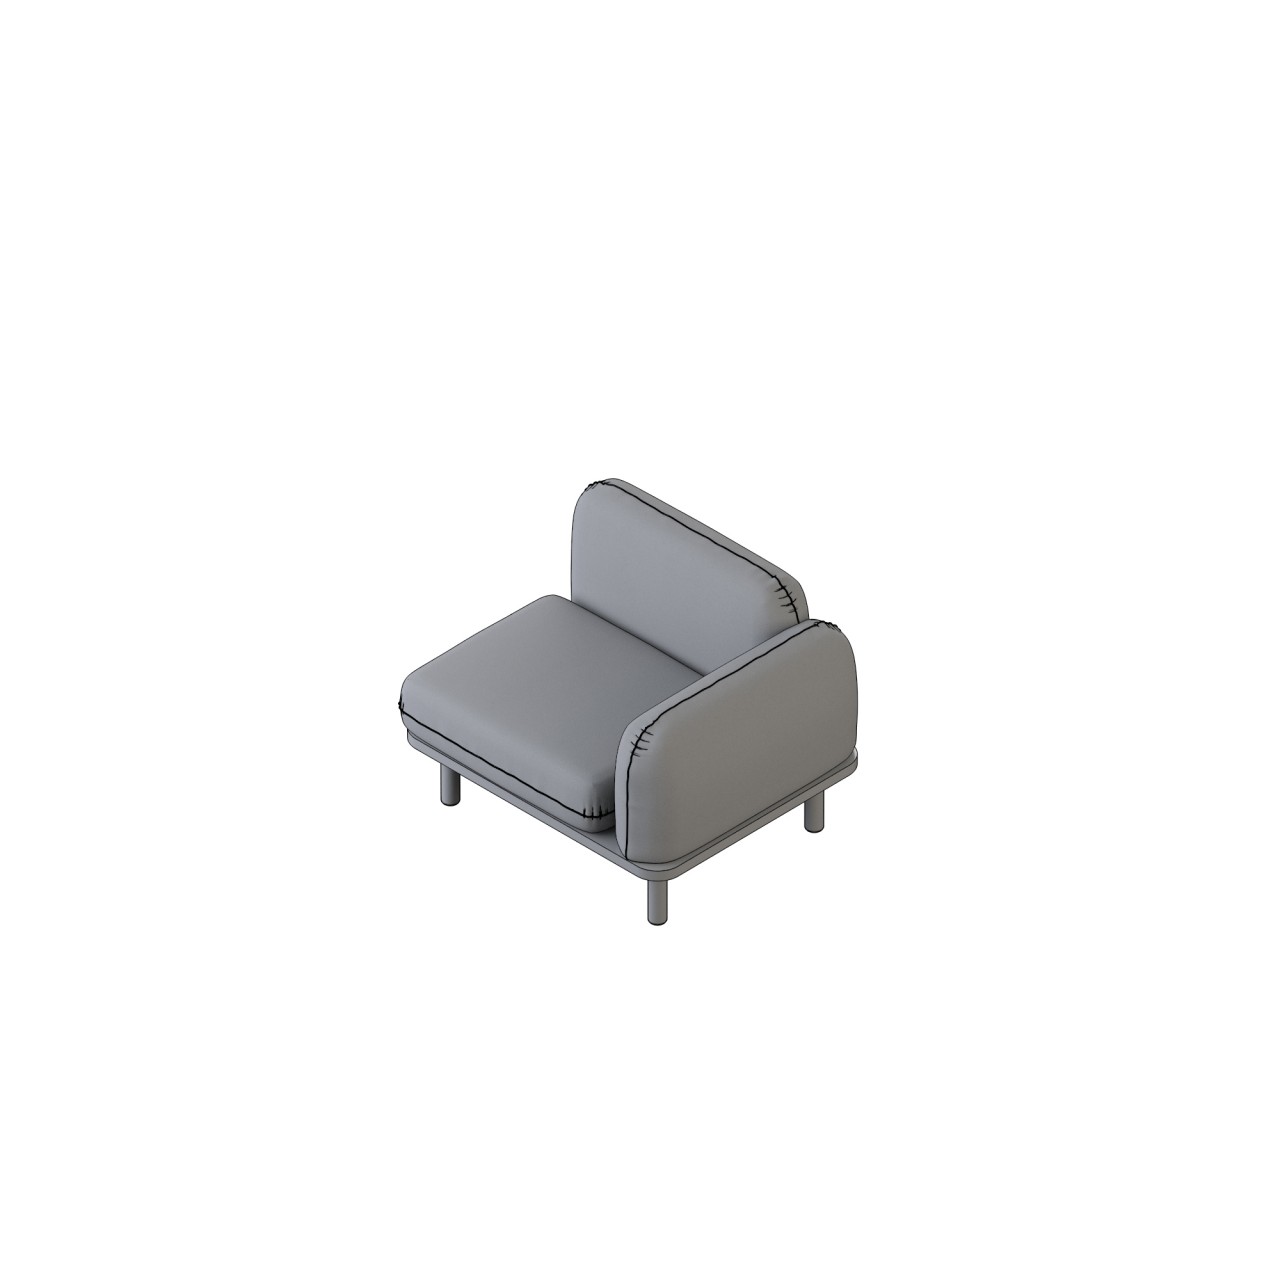 Soft - 24005L
COM 5.75 (arms 1.25, back 1.5, base 1, seat 2.5)